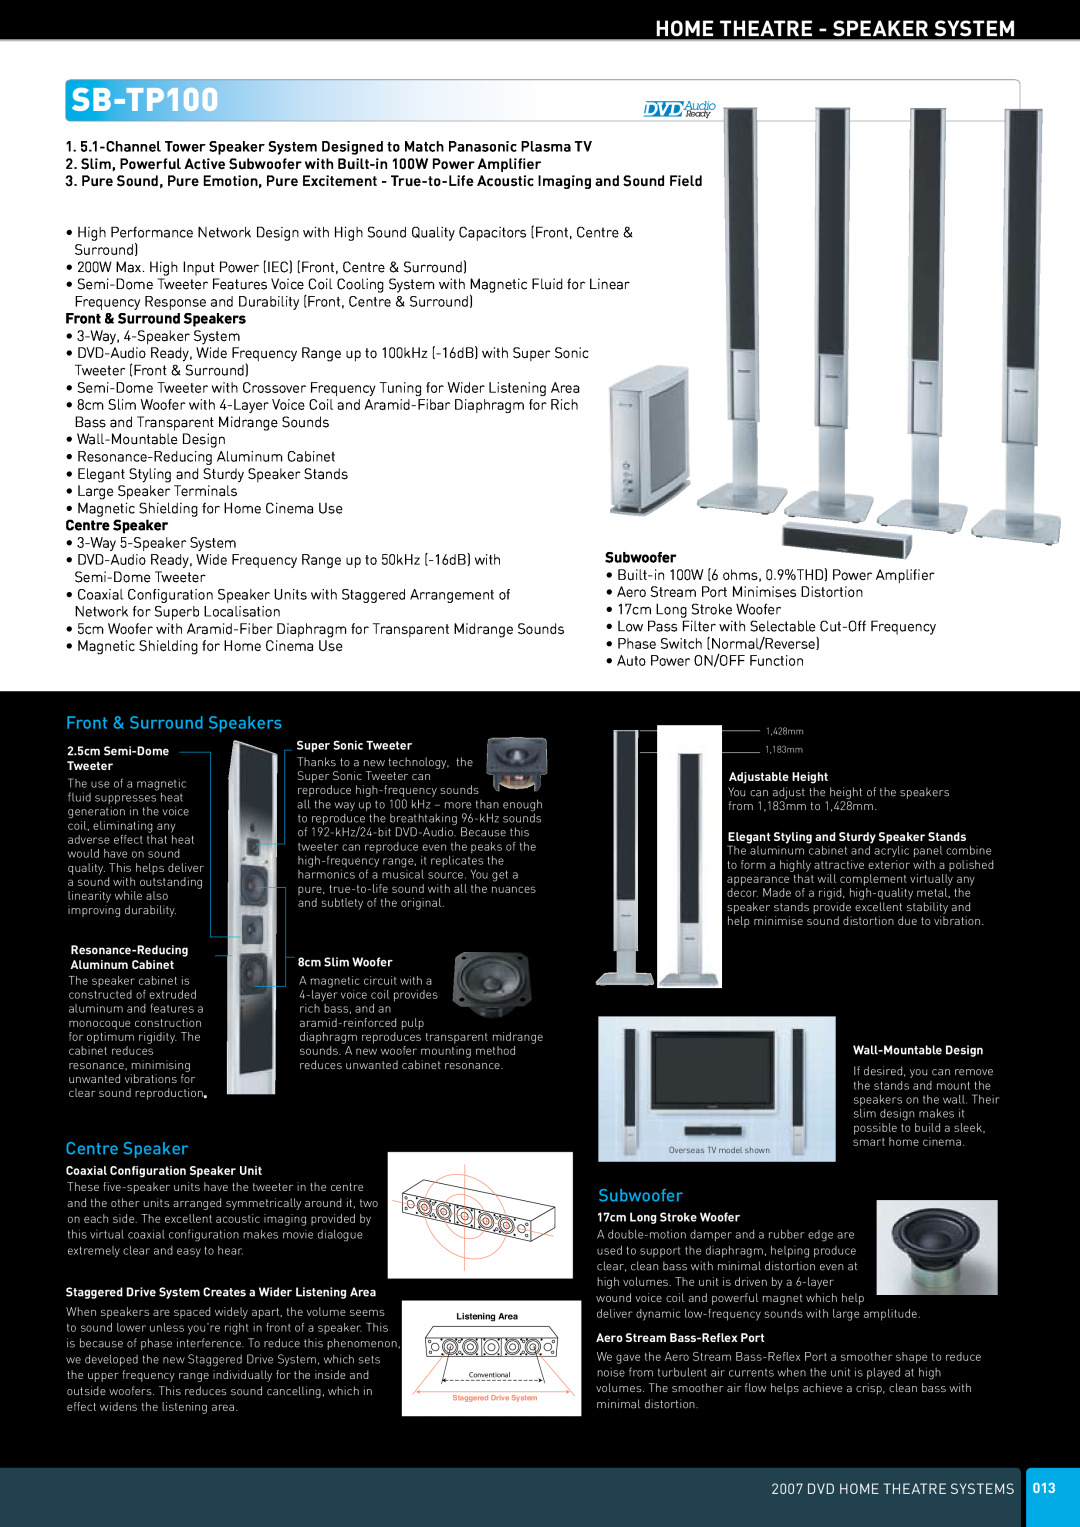 Panasonic DVD Home Theatre System manual SB-TP100, Home Theatre - Speaker System, Front & Surround Speakers, Centre Speaker 